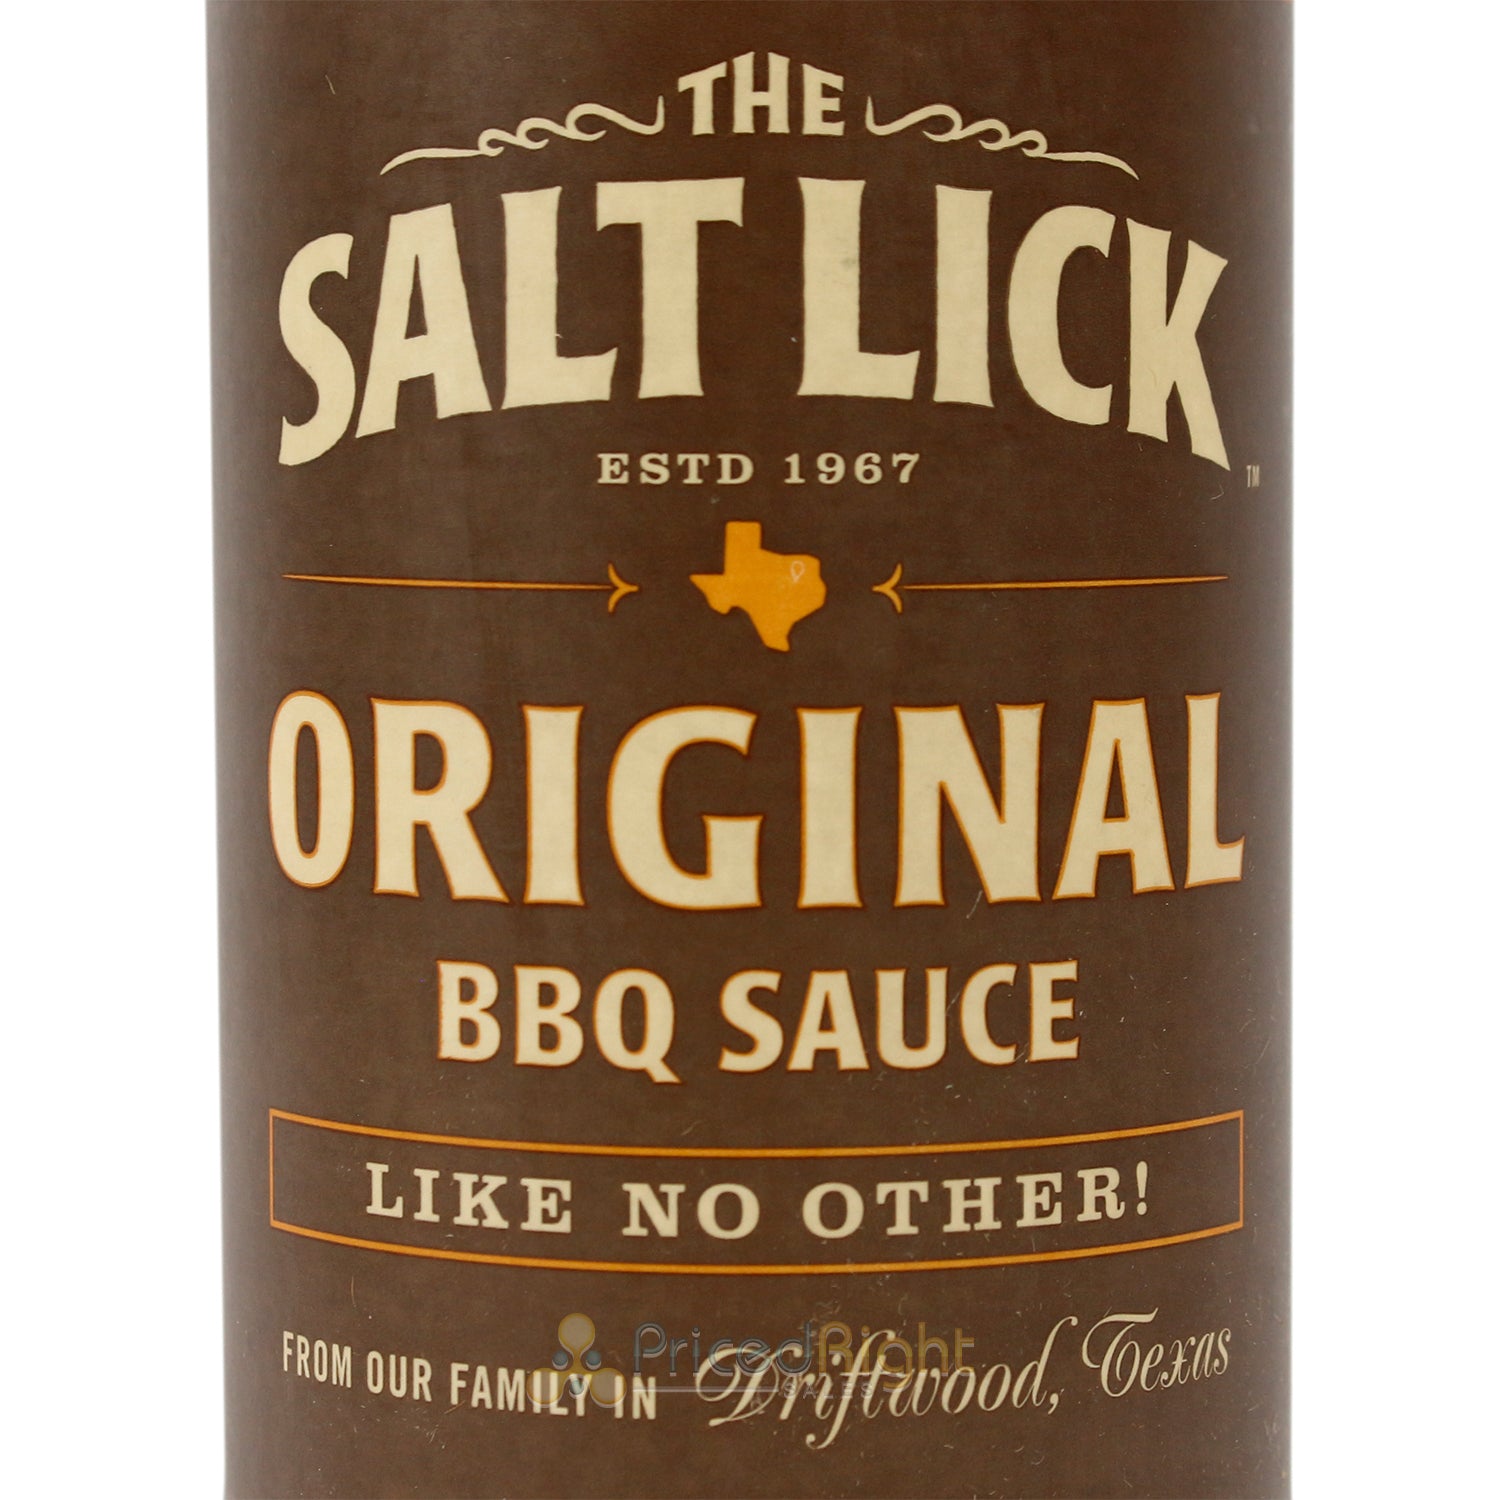 Salt Lick BBQ Original Recipe BBQ Sauce And Baste Gluten-Free All-Natural 12 oz